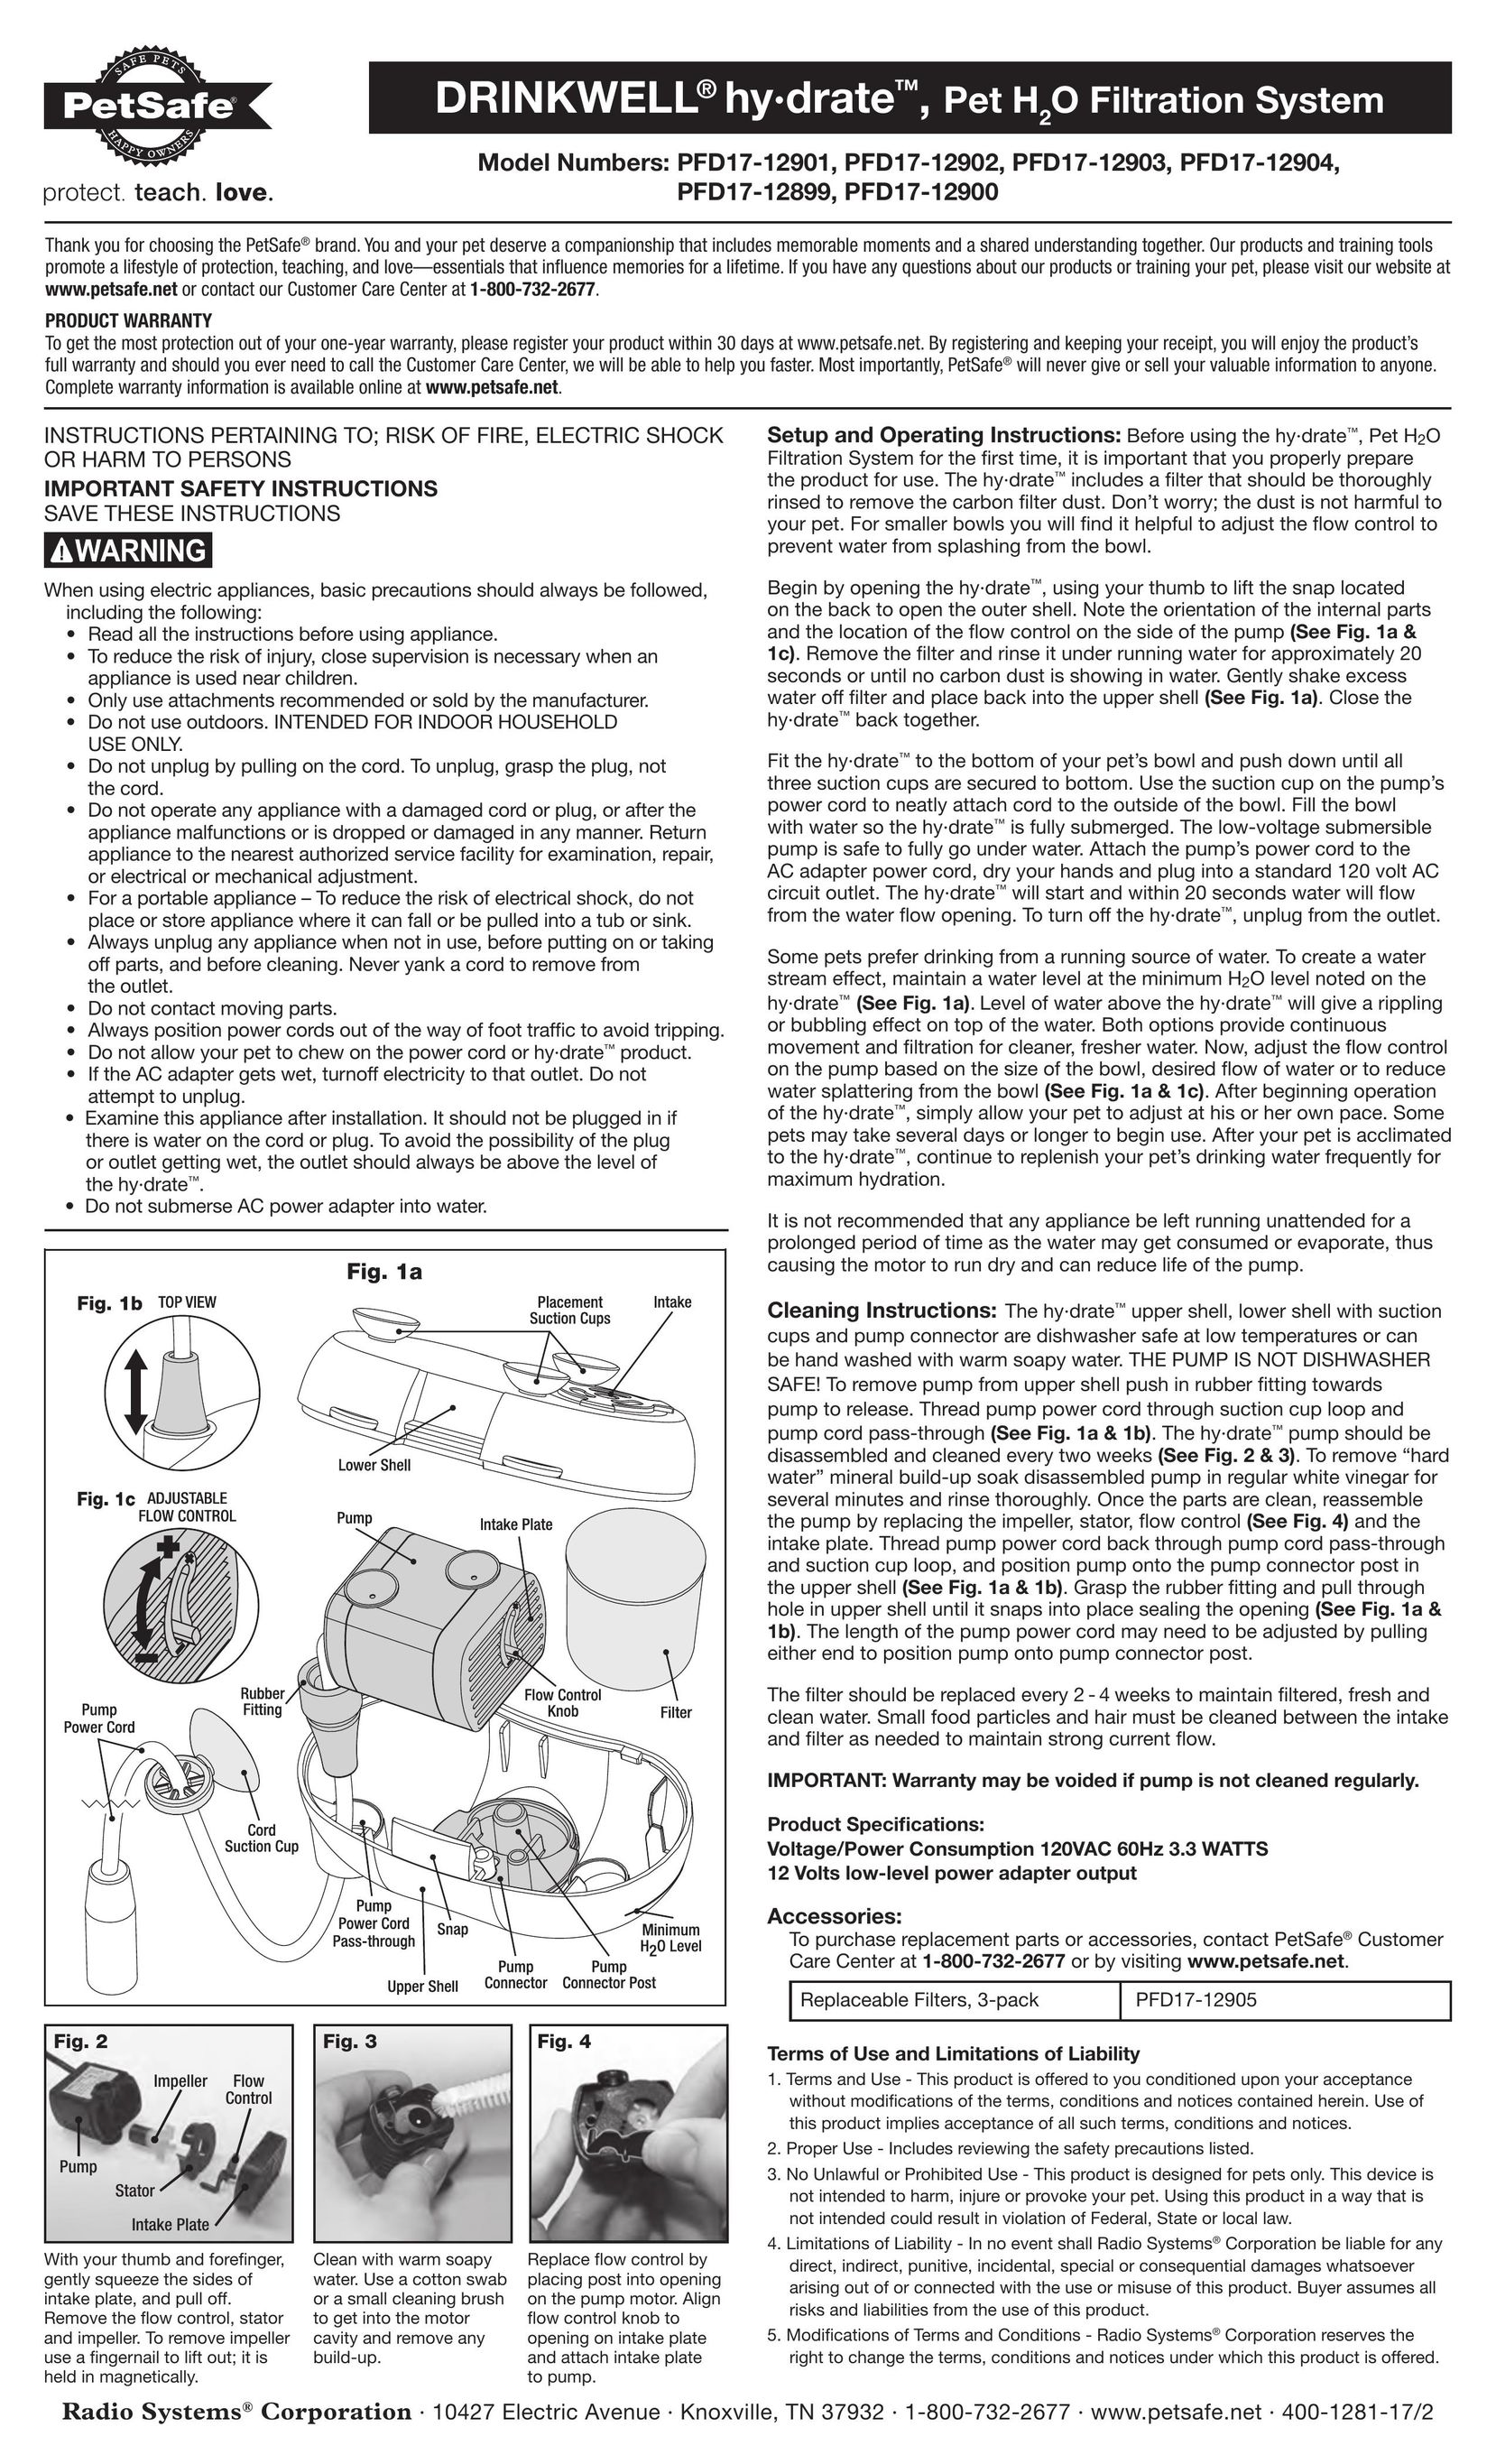 Petsafe PFD17-12901 Water System User Manual